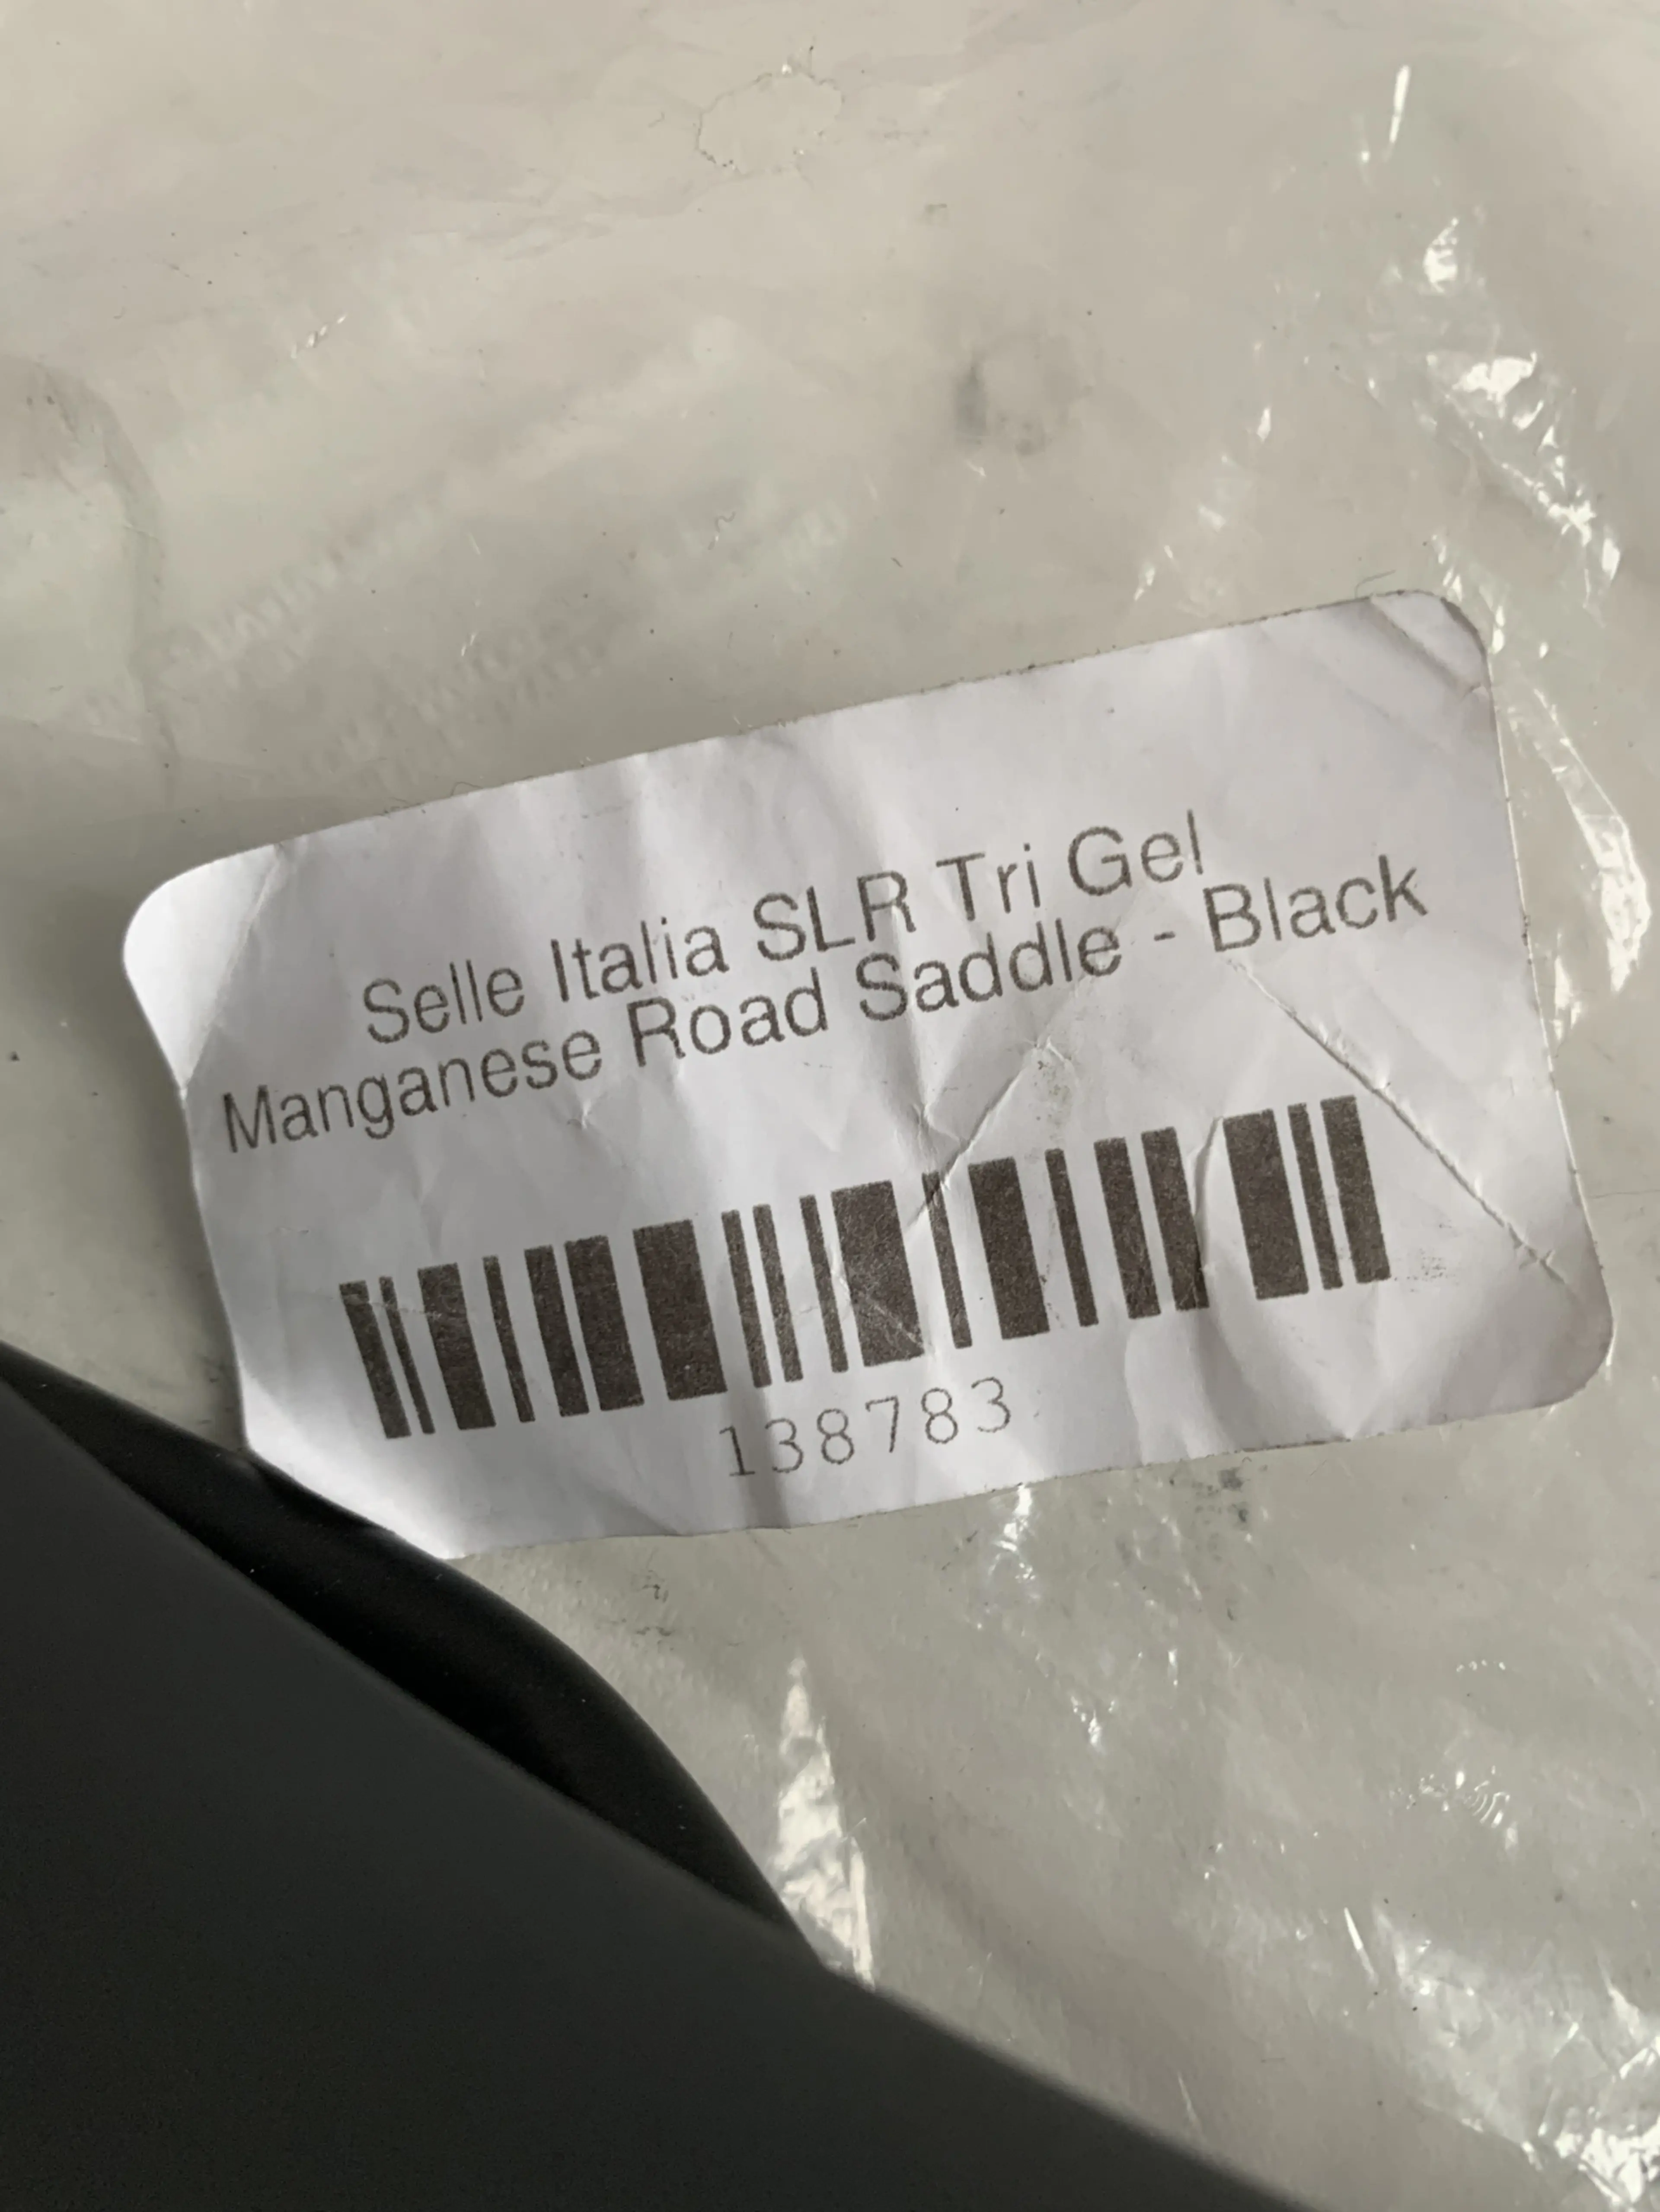 8. Sa Selle Italia SRL Tri Gel - Carbon/Manganese - 252 grame